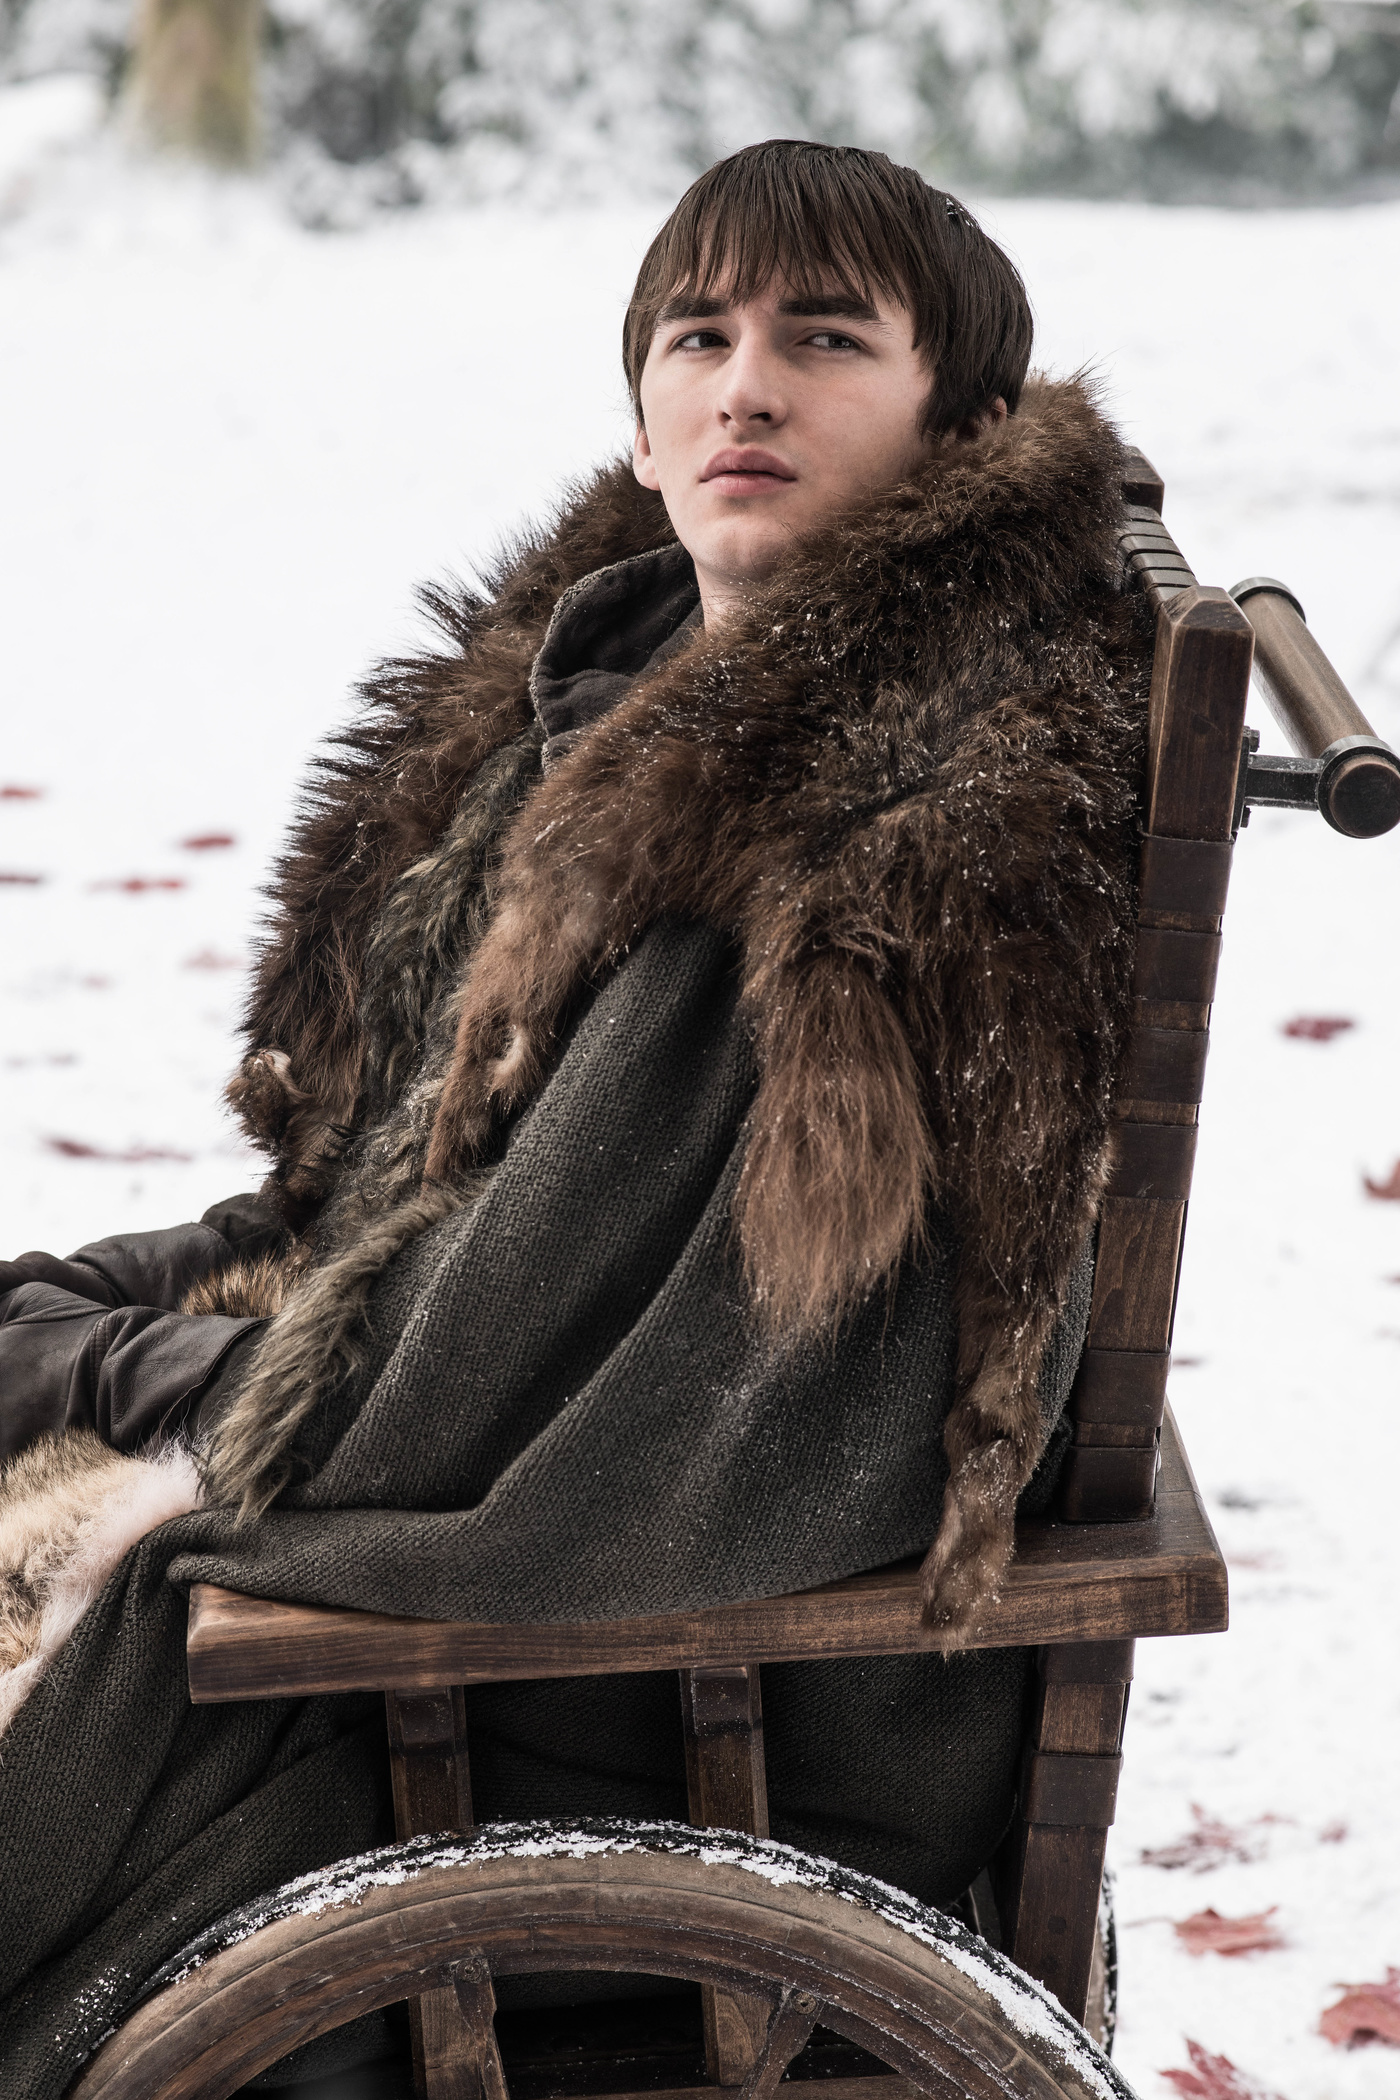 Bran Stark in Game of Thrones season 8 episode 2